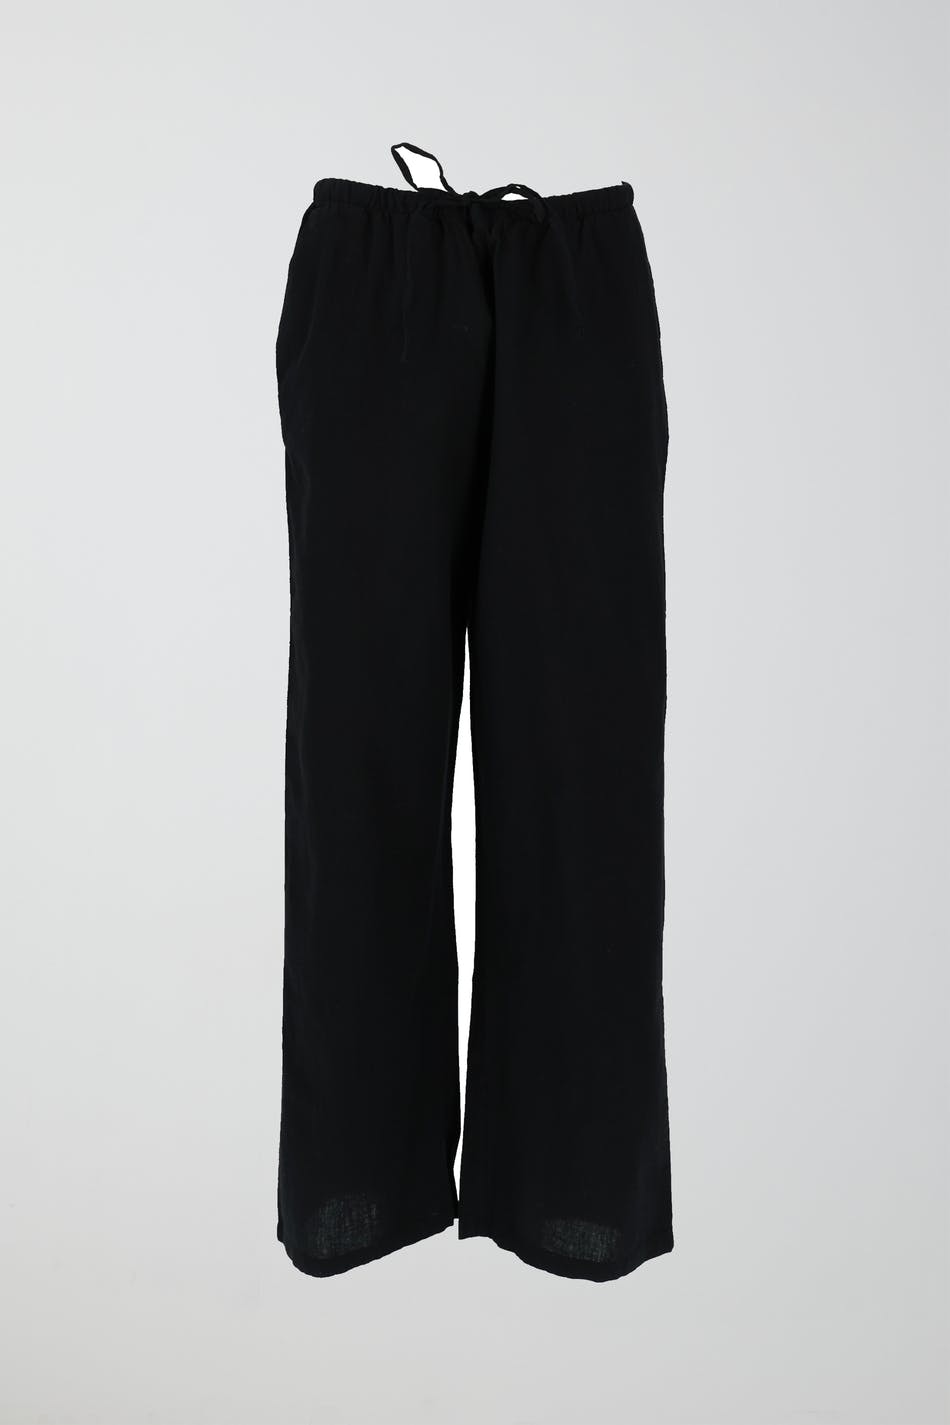 Gina Tricot - Tall linen blend trousers - linnebyxor - Black - XS - Female